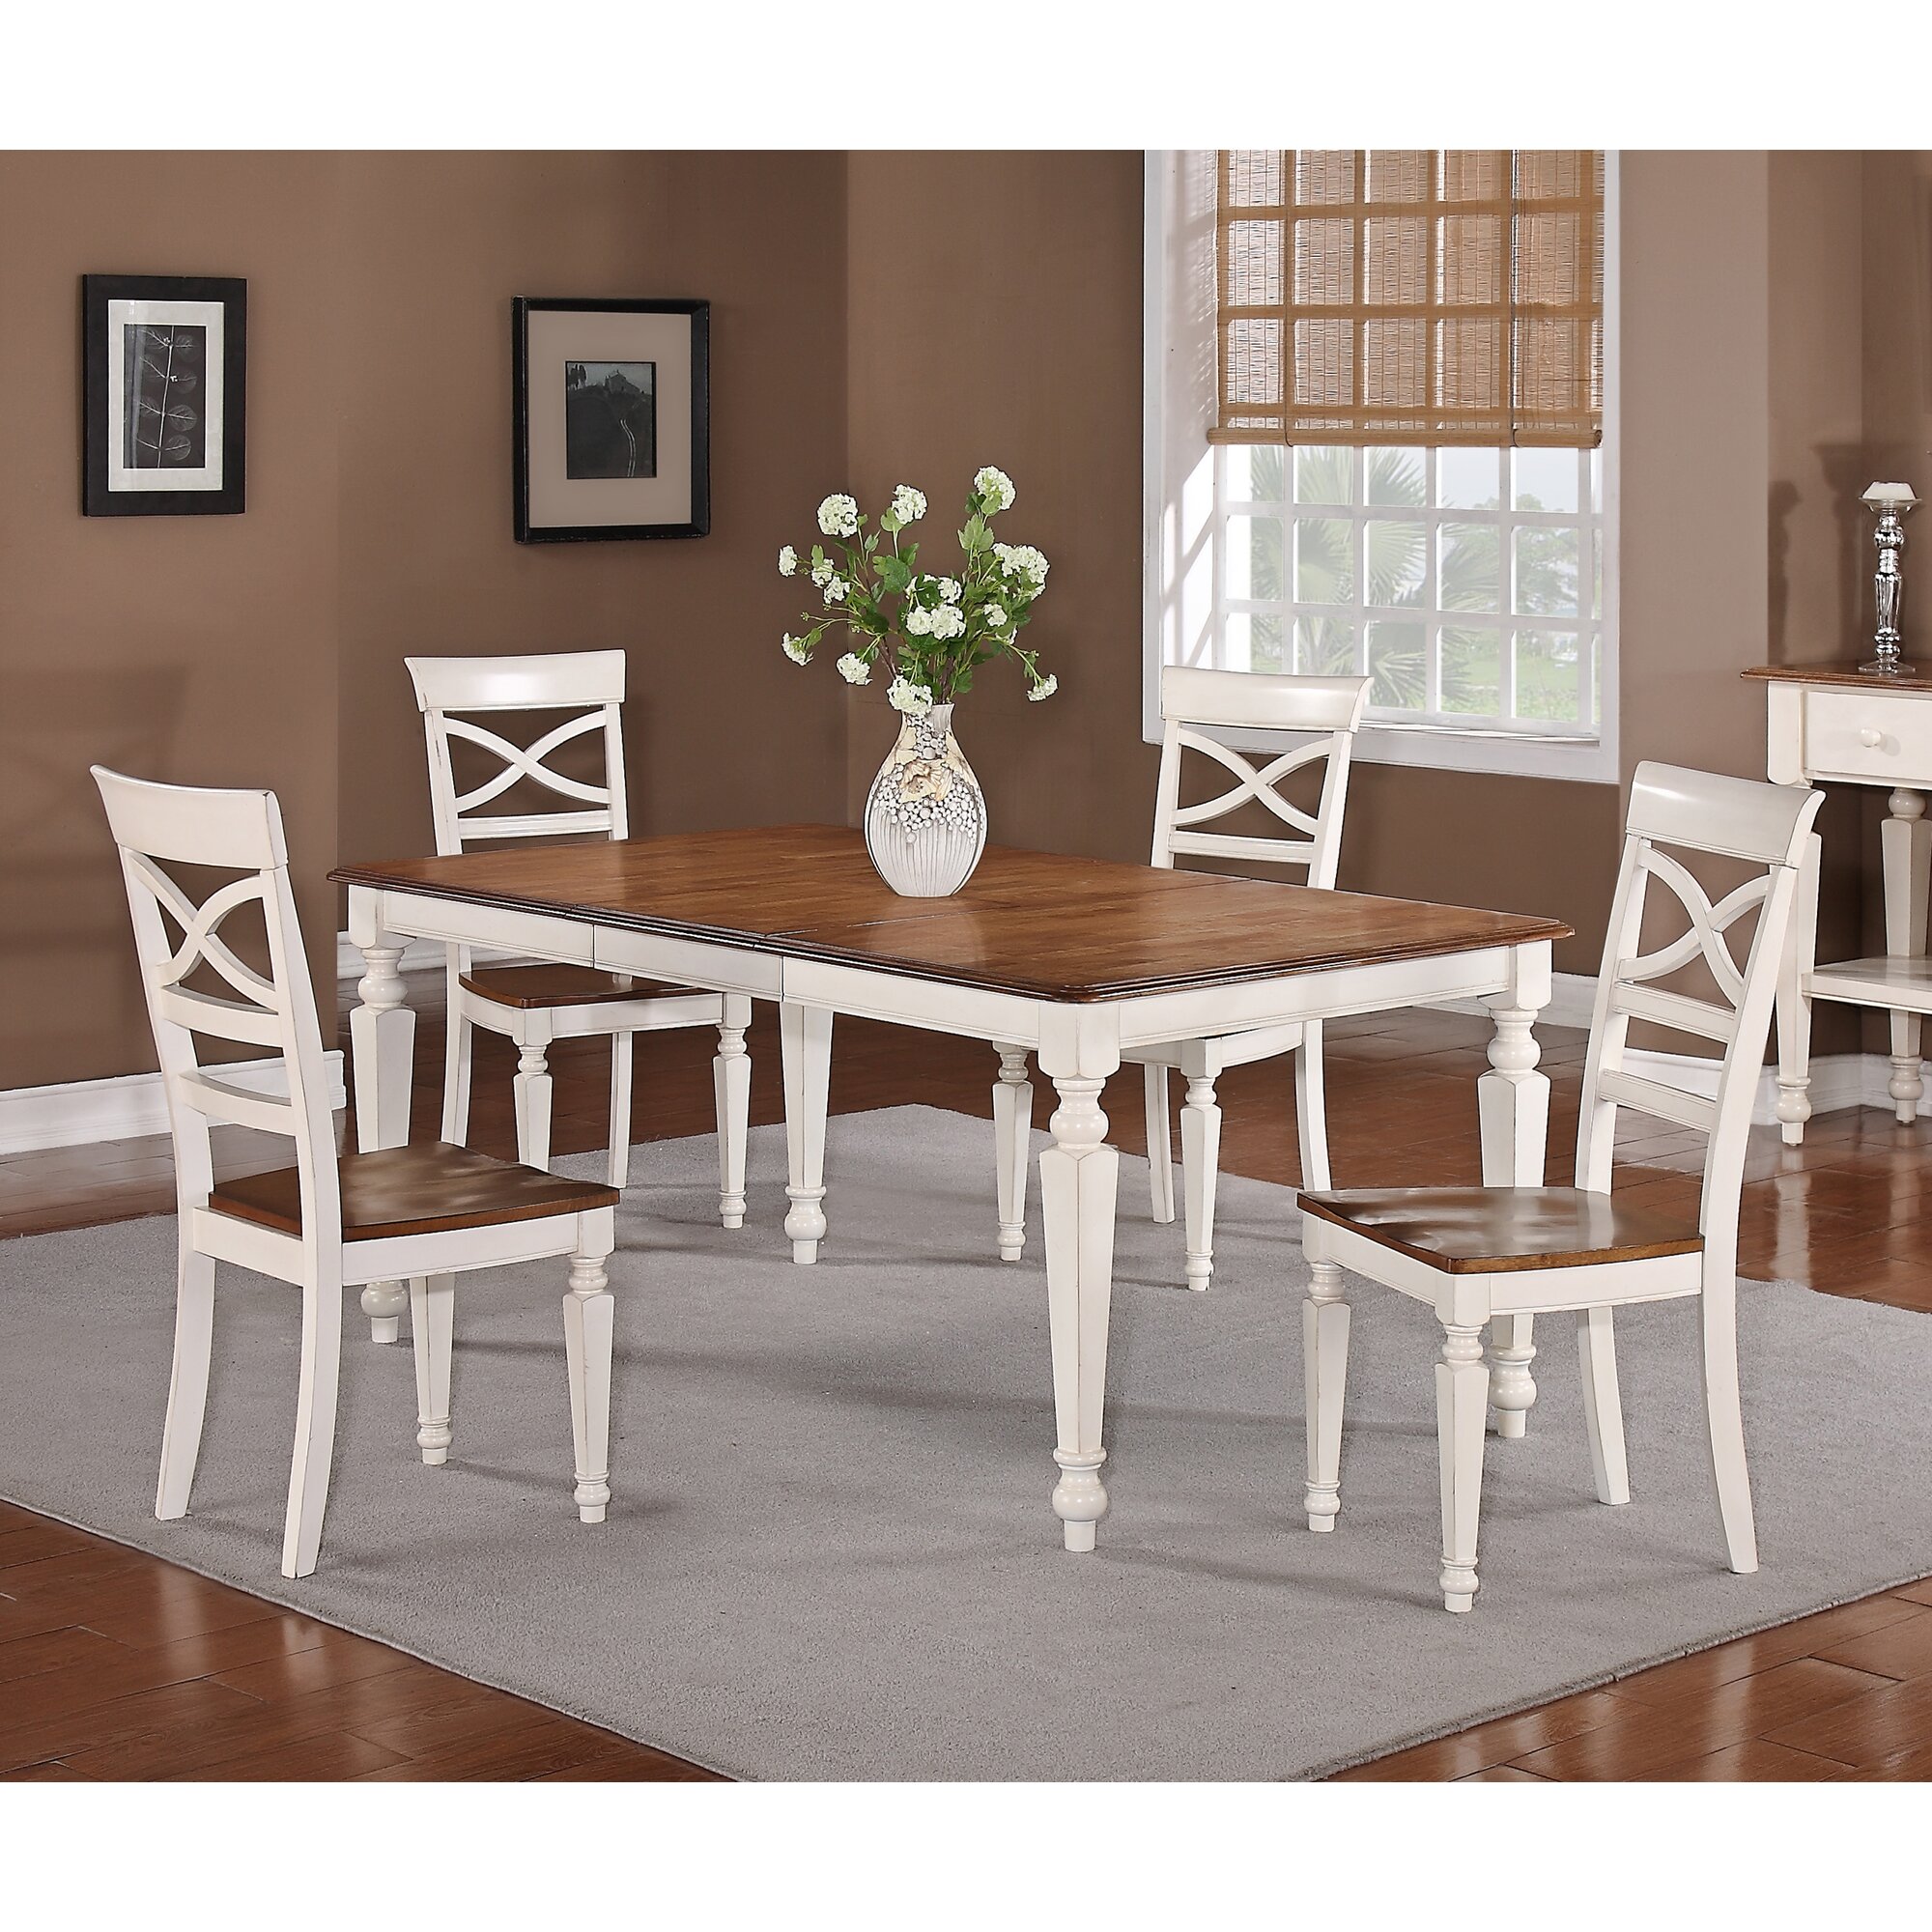 Wildon Home ® Extendable Dining Table & Reviews | Wayfair